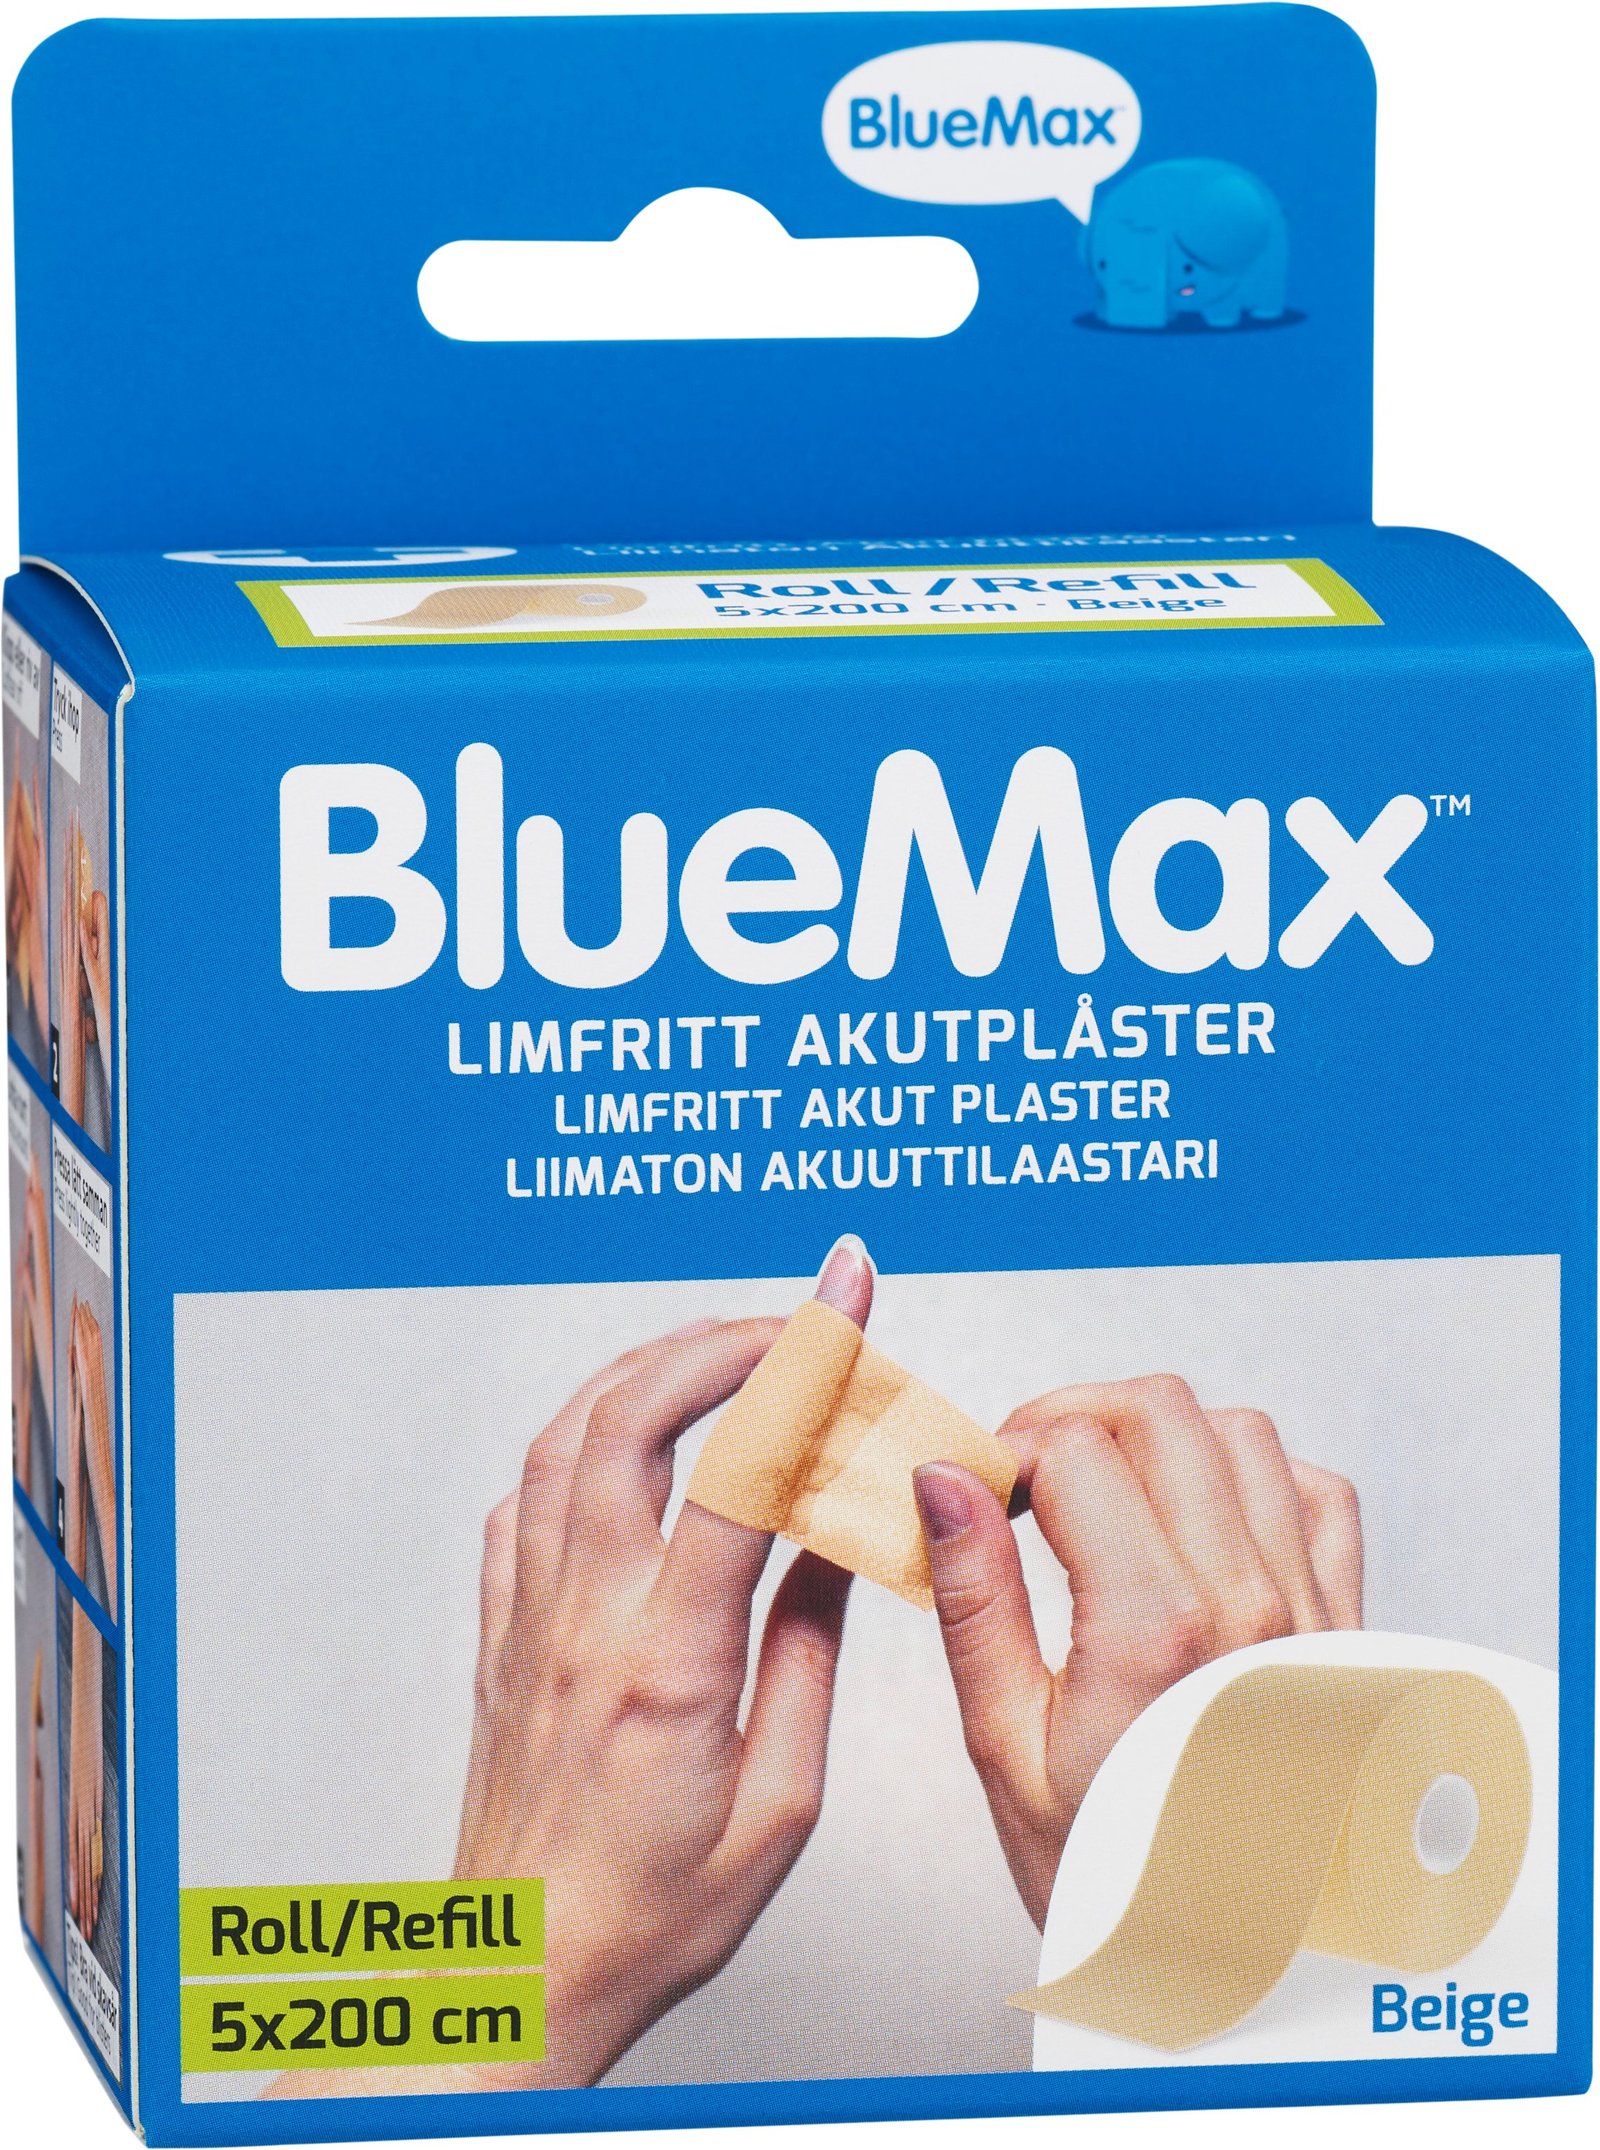 BlueMax Limfritt Akutplåster Refill 5x200cm Beige 1 st